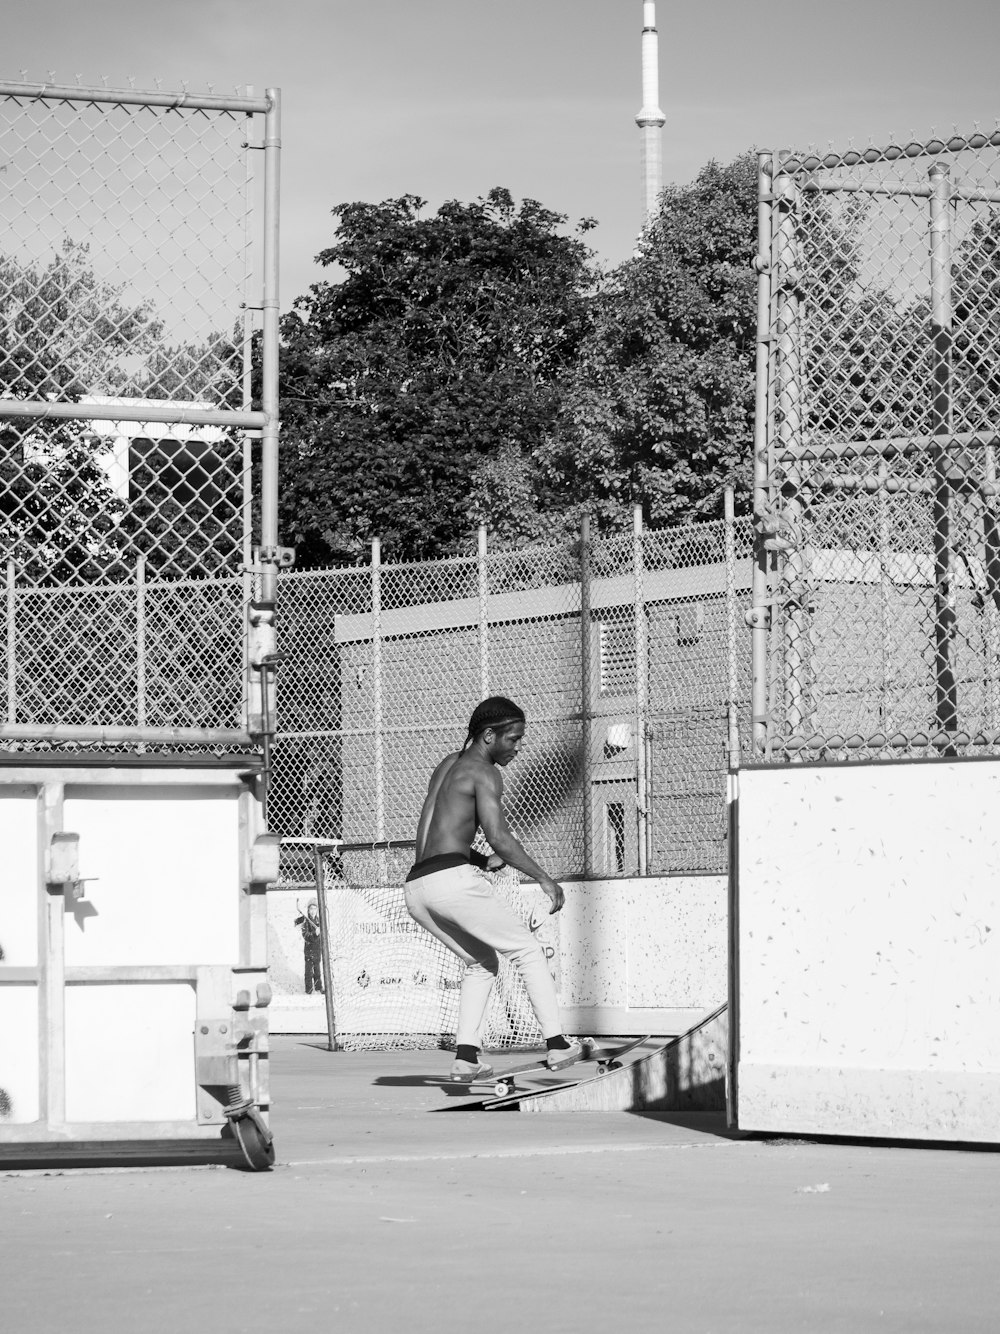 grayscale photo of man skateboarding